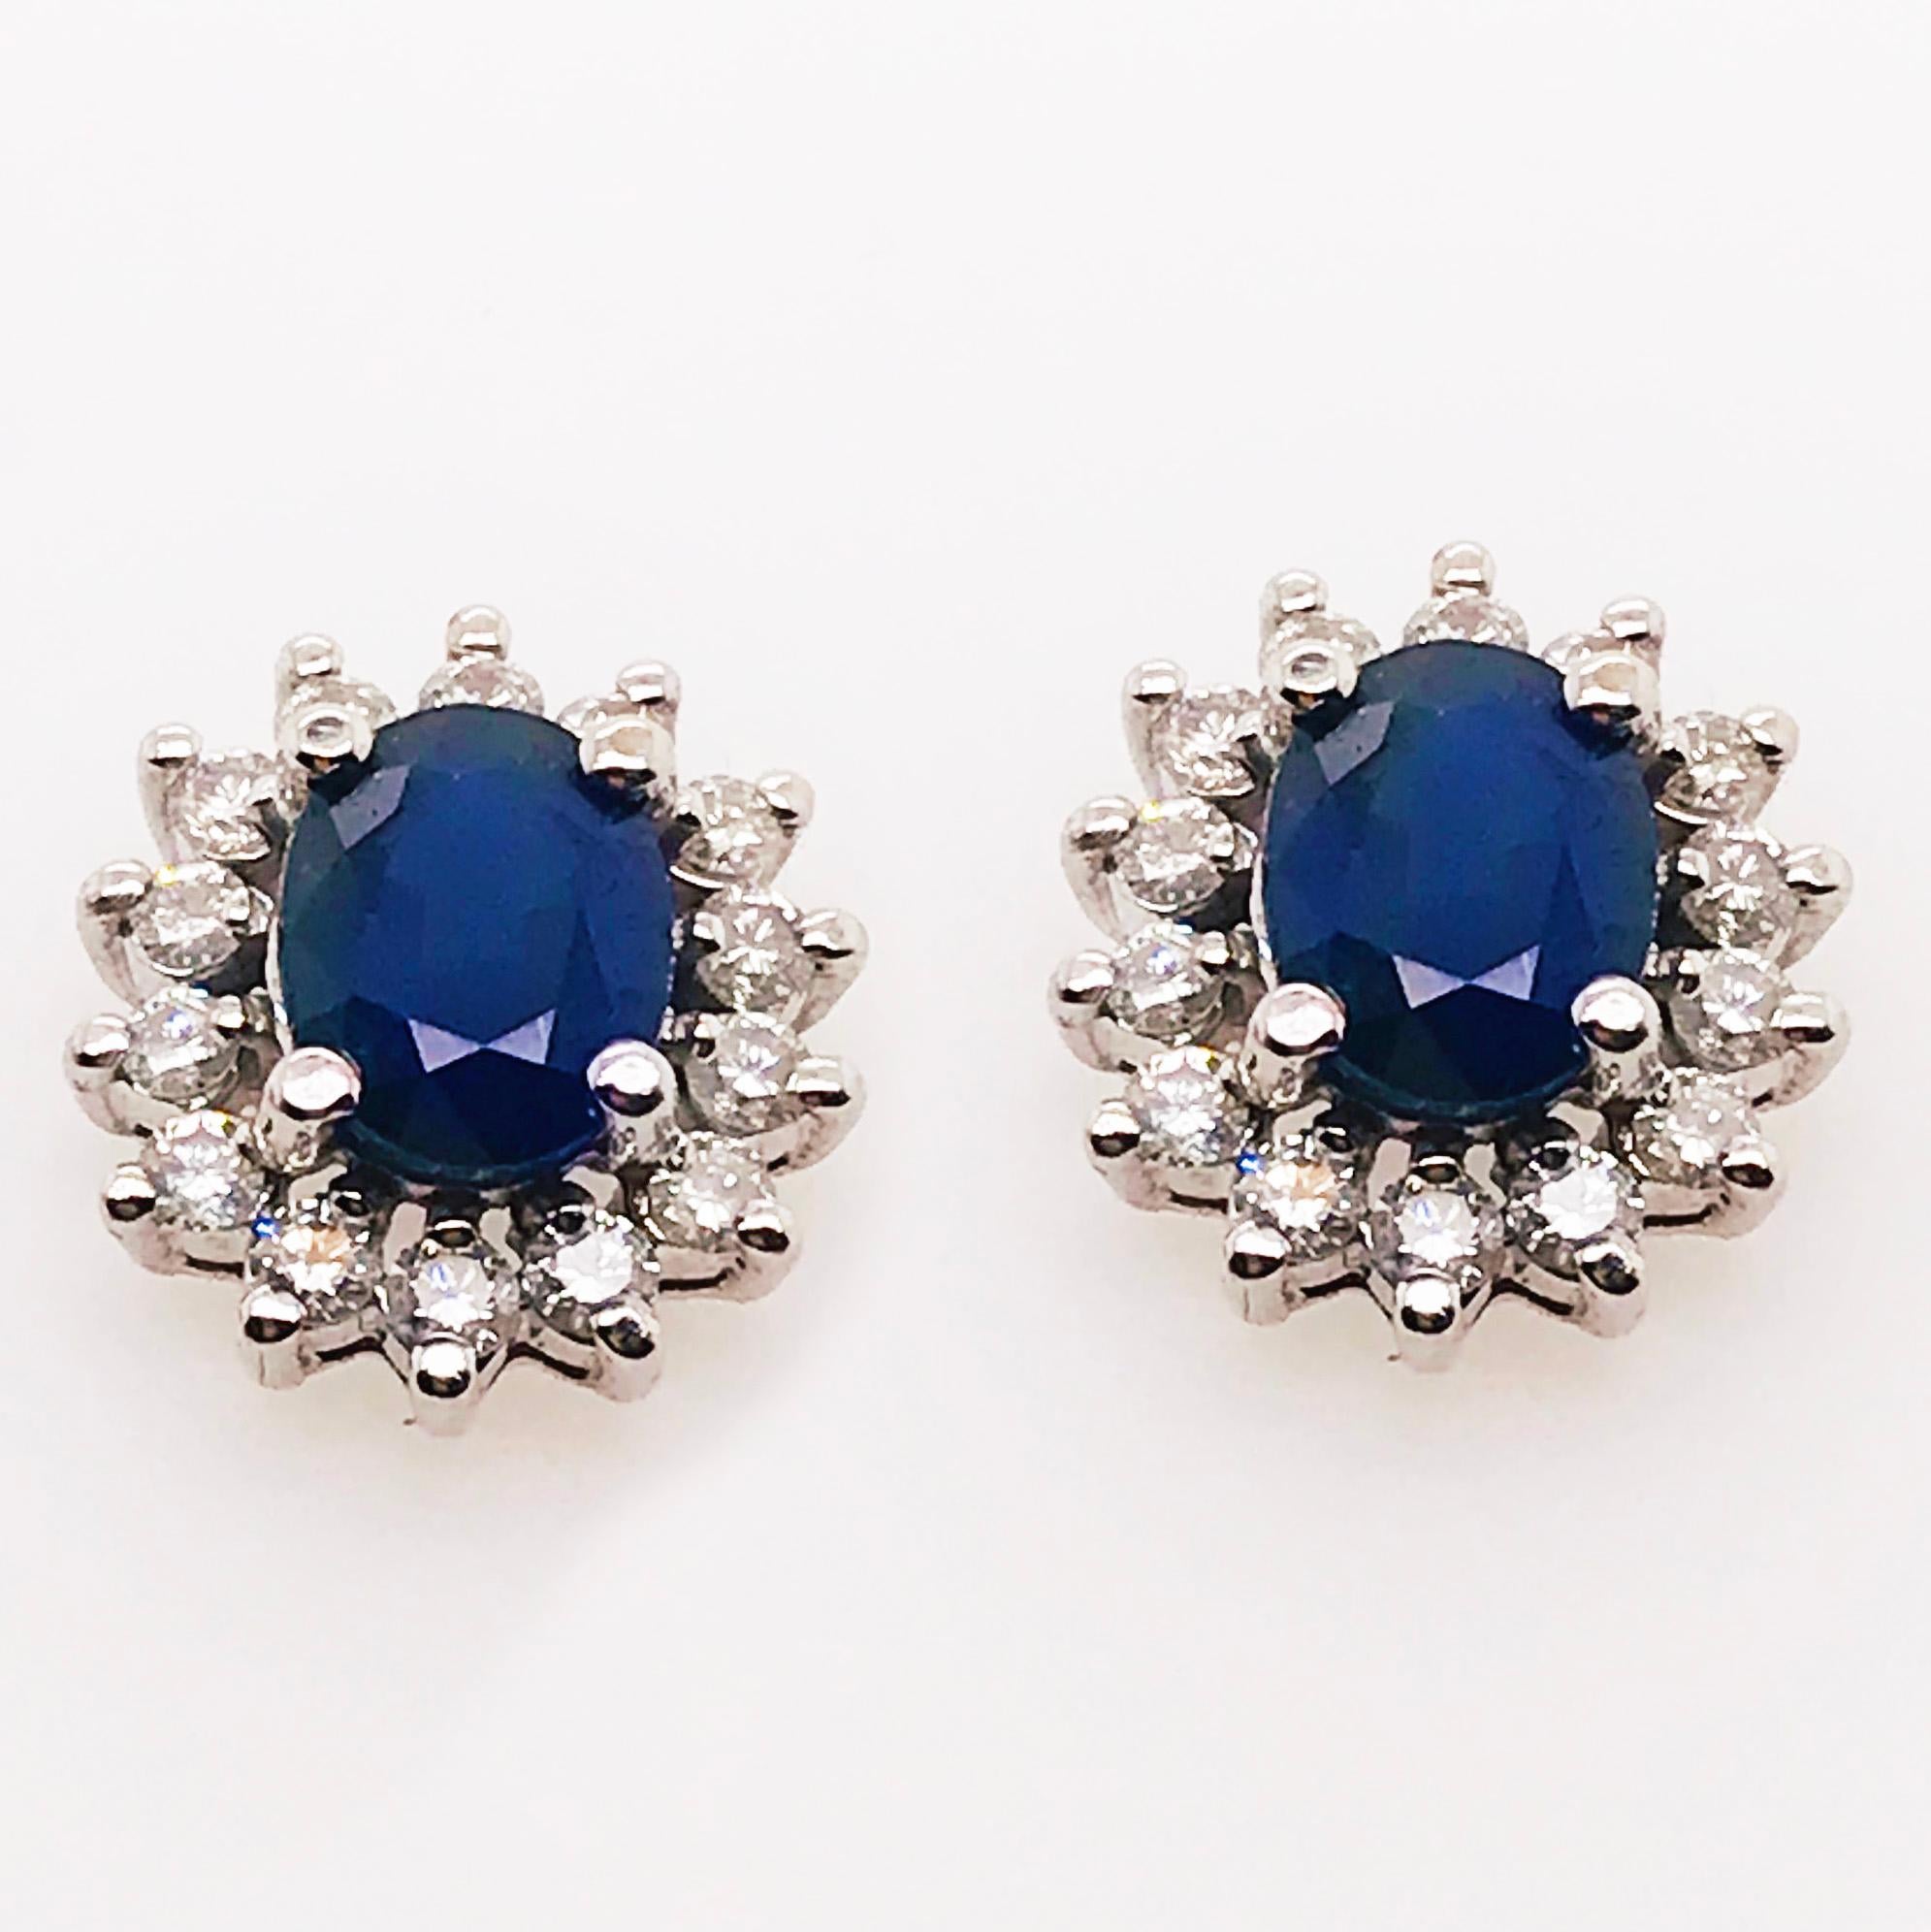 Oval Cut 2.50 Carat Sapphire and .75 Carat Diamond Earring Studs in 14 Karat White Gold